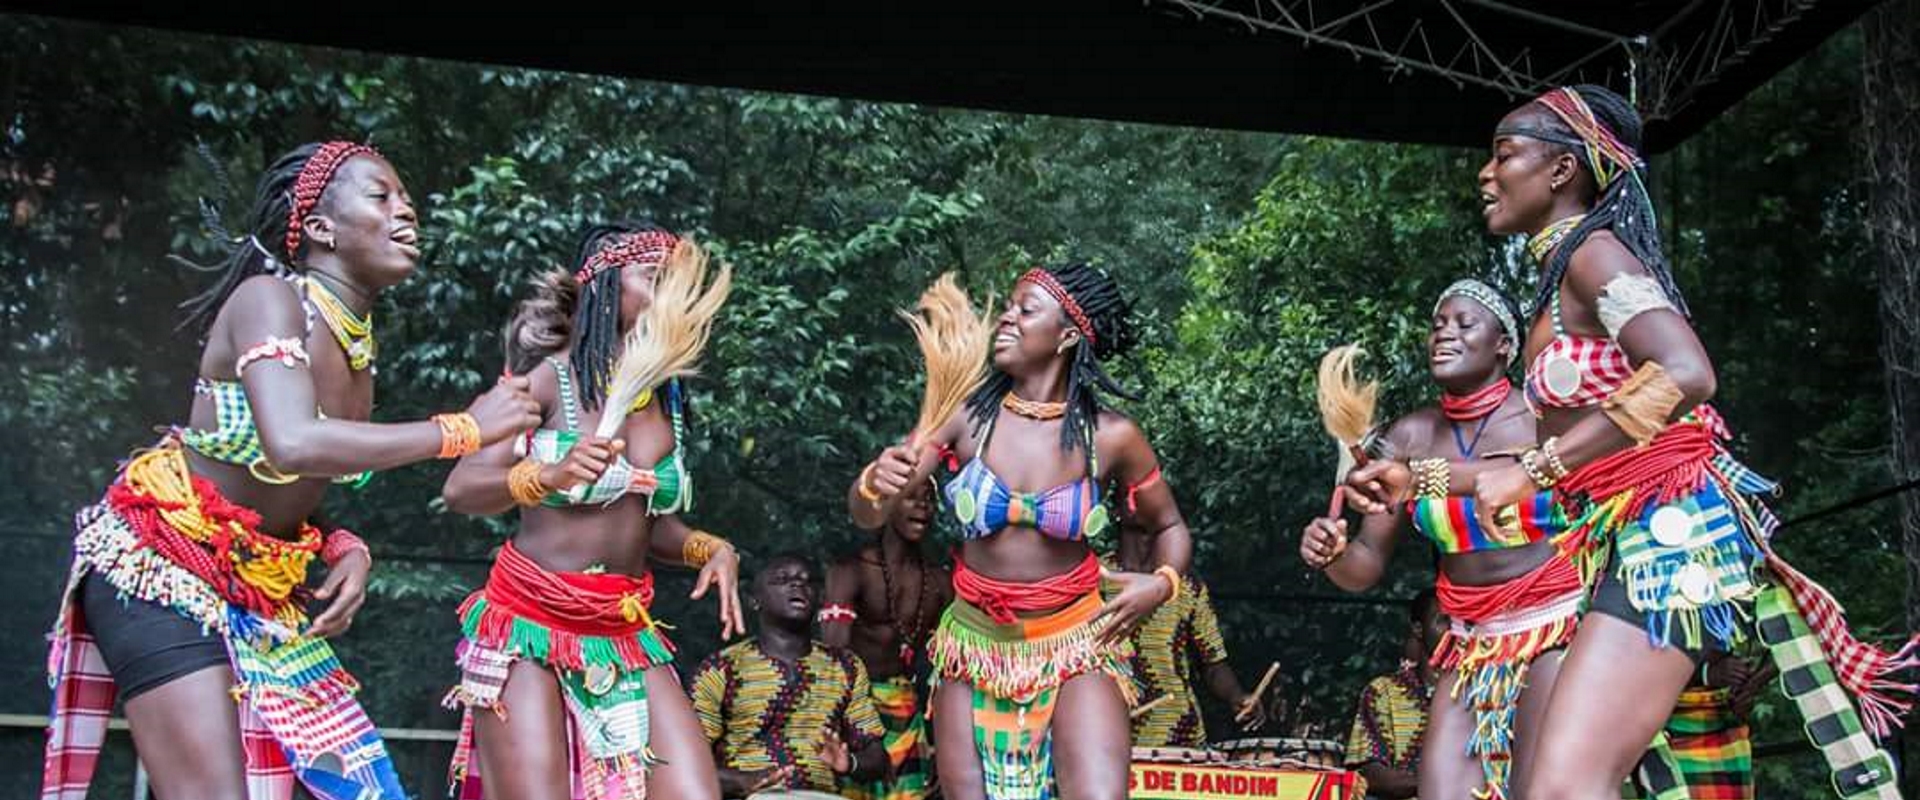 netos de bandim donne danza Guinea Bissau Mani Tese 2018